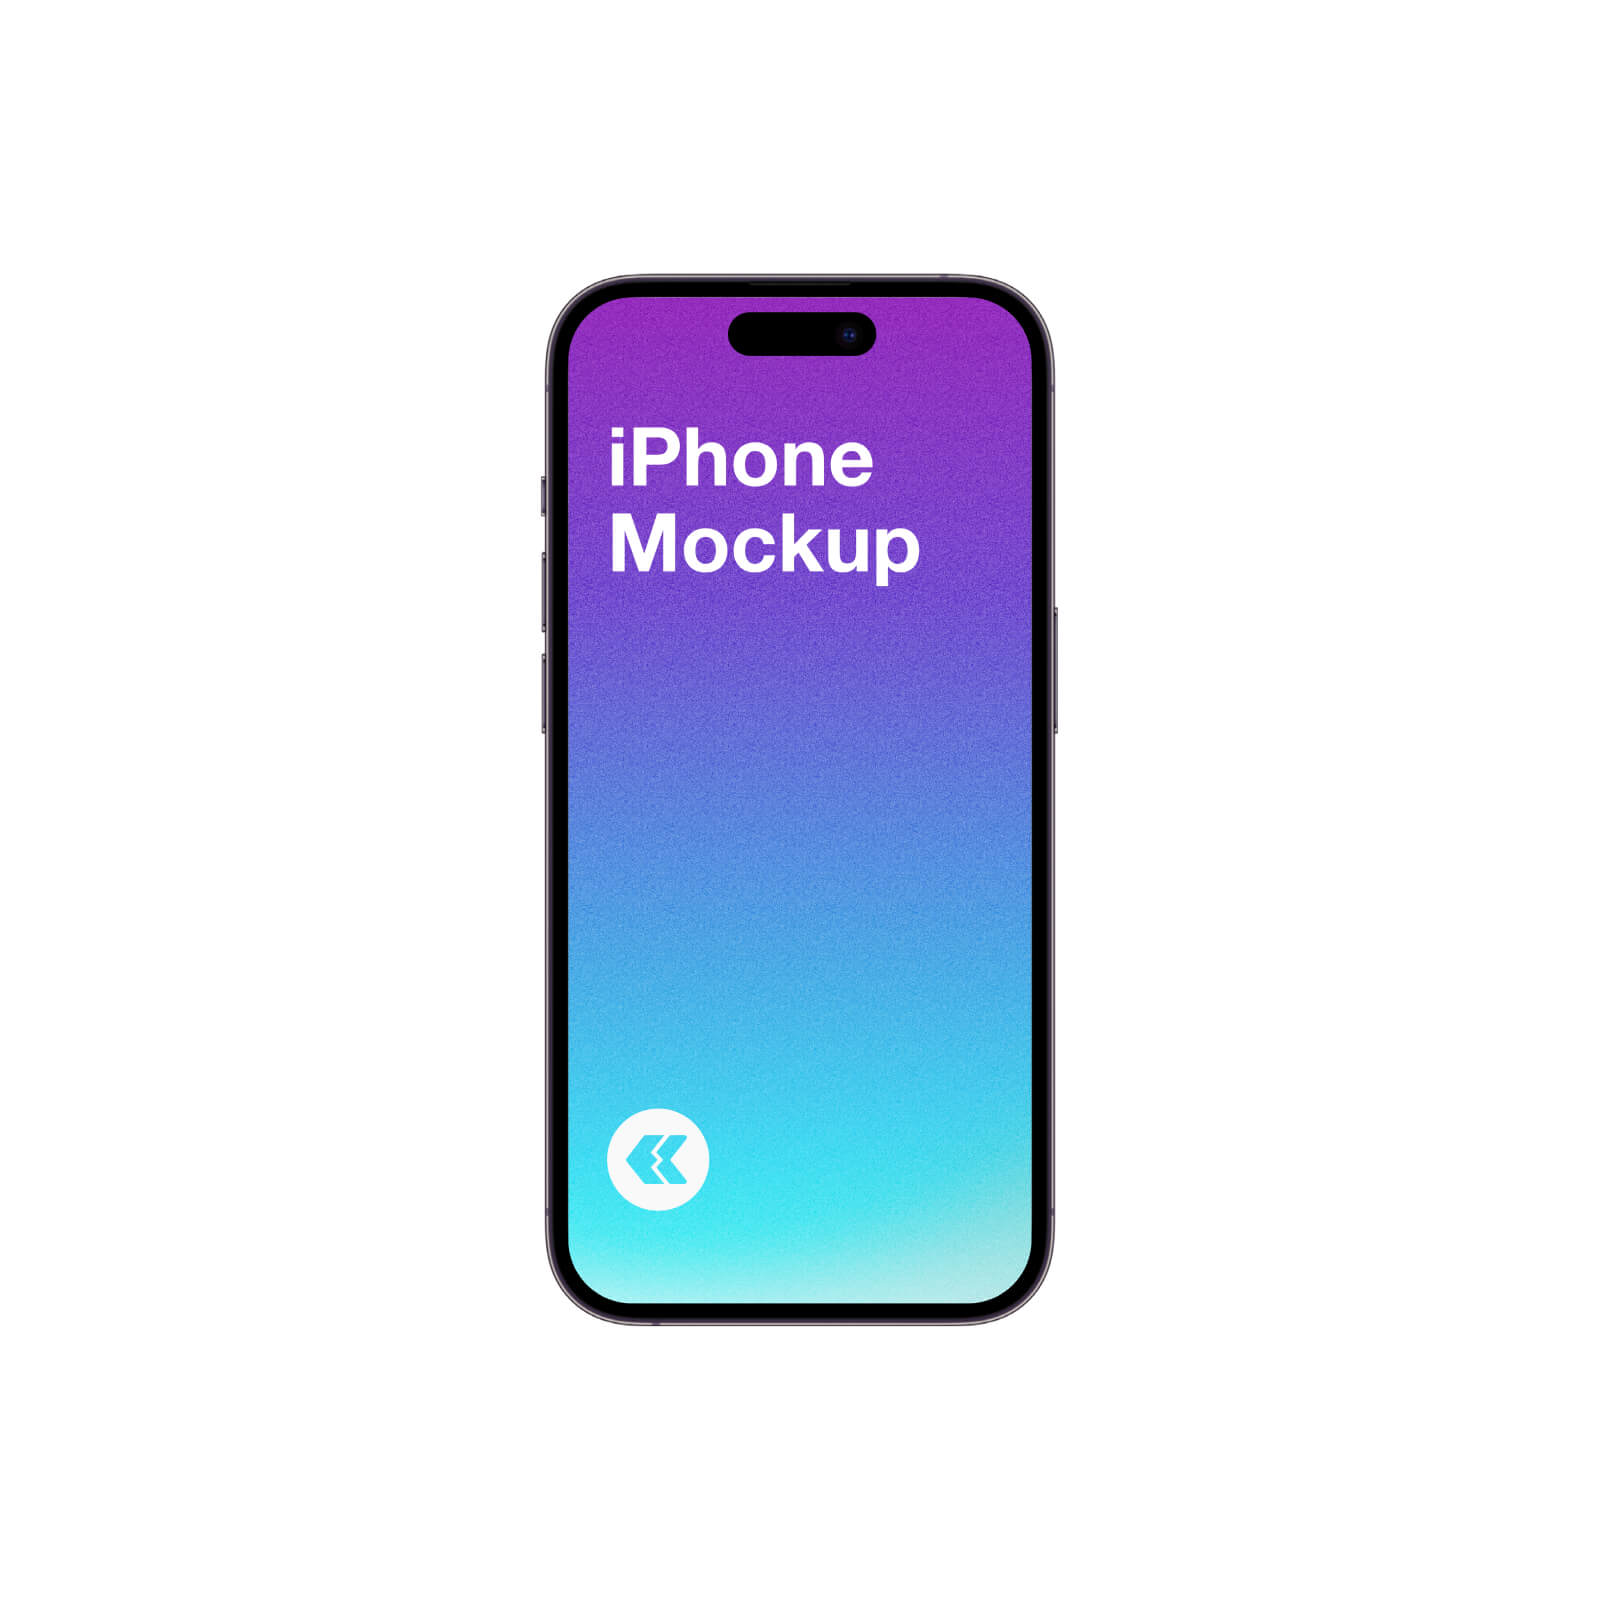 苹果系列设备iMac Macbook pro iPad iPhone iWatch样机模型Mockup .fig素材